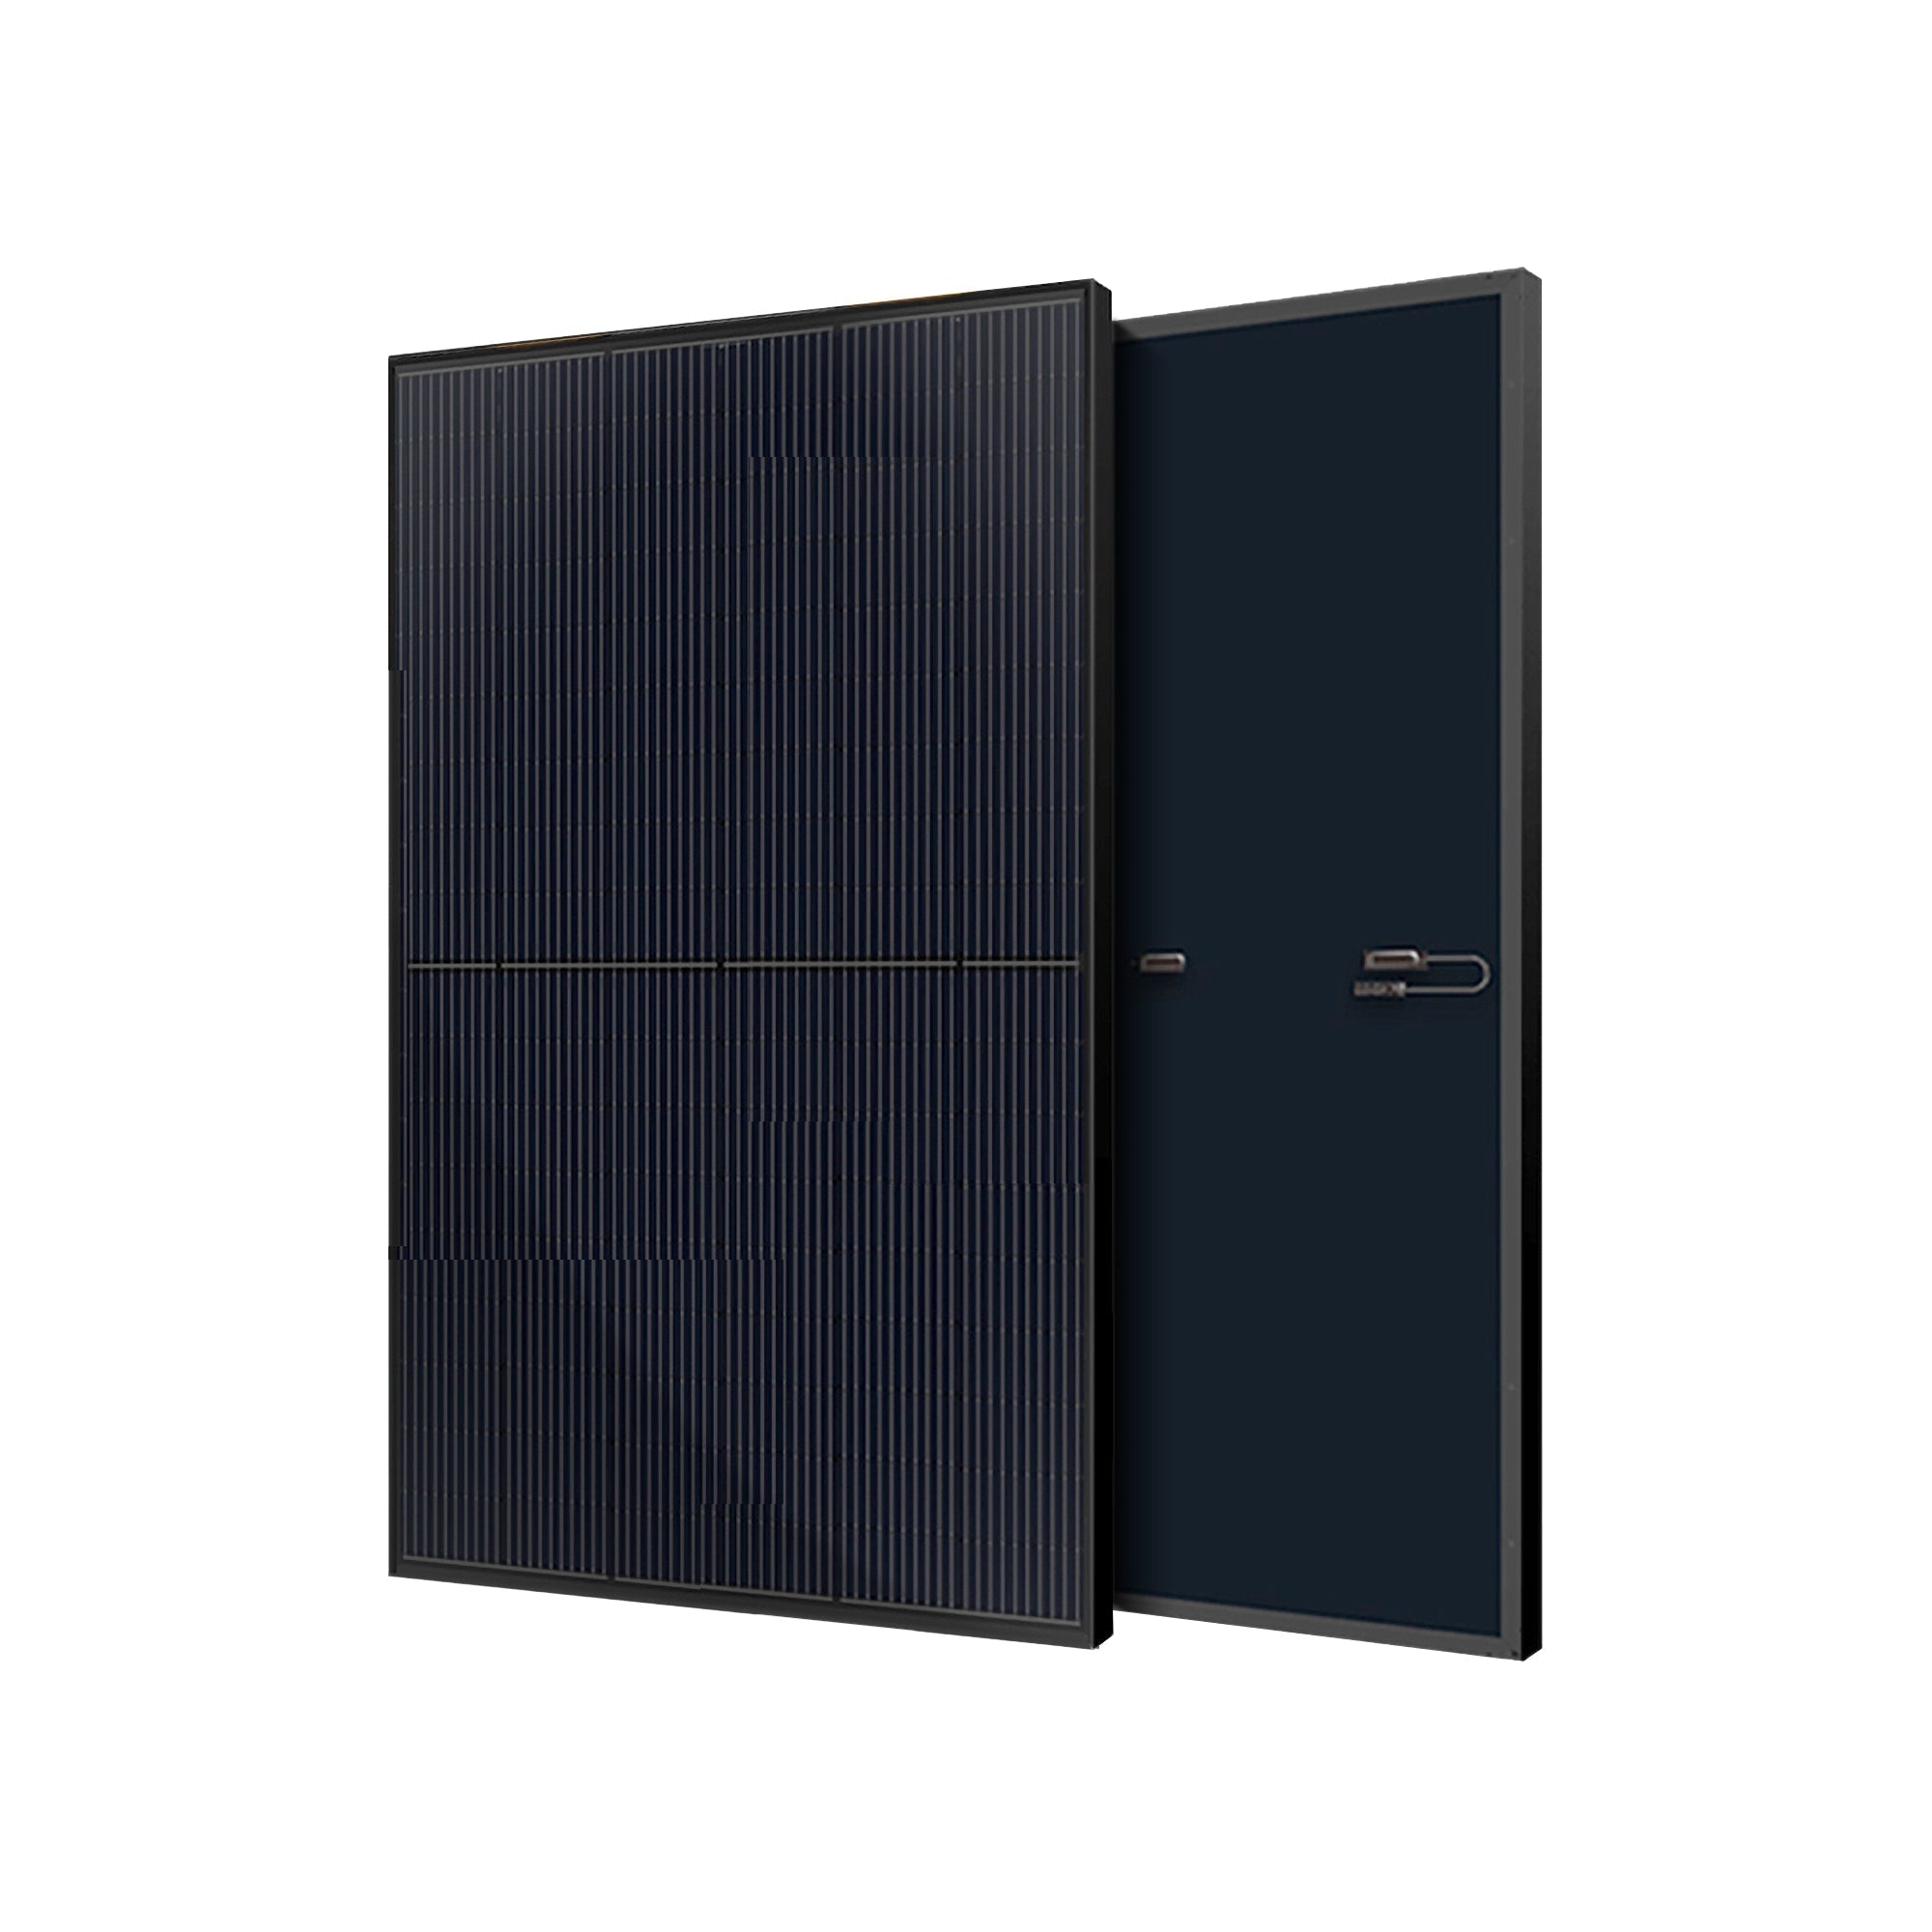 RICH SOLAR MEGA 410 Watt Monocrystalline Solar Panel (10pcs) | High Efficiency | Black Mono-facial Module | Grid-Tie | Off-Grid - Solar Generators and Power Stations Plus